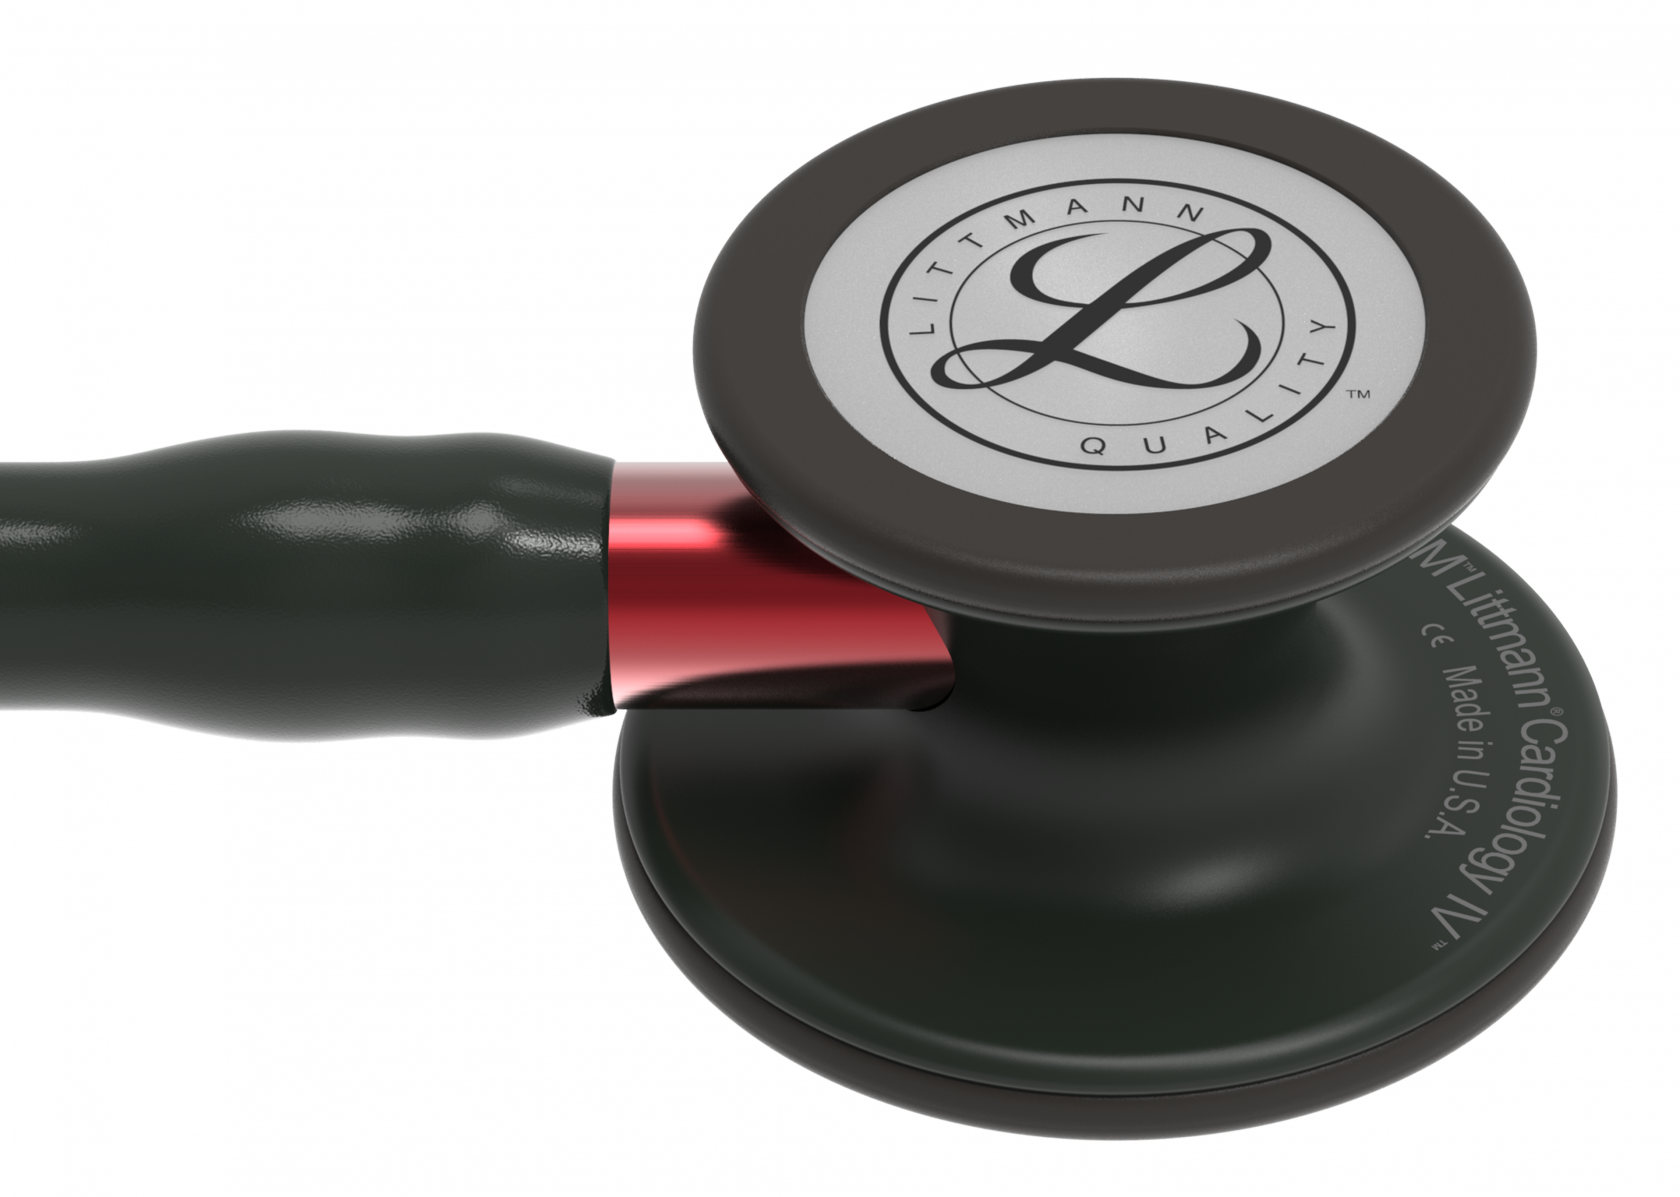 3M Stethoscope Littmann Cardiology IV Black Edition with Red Stem image 1